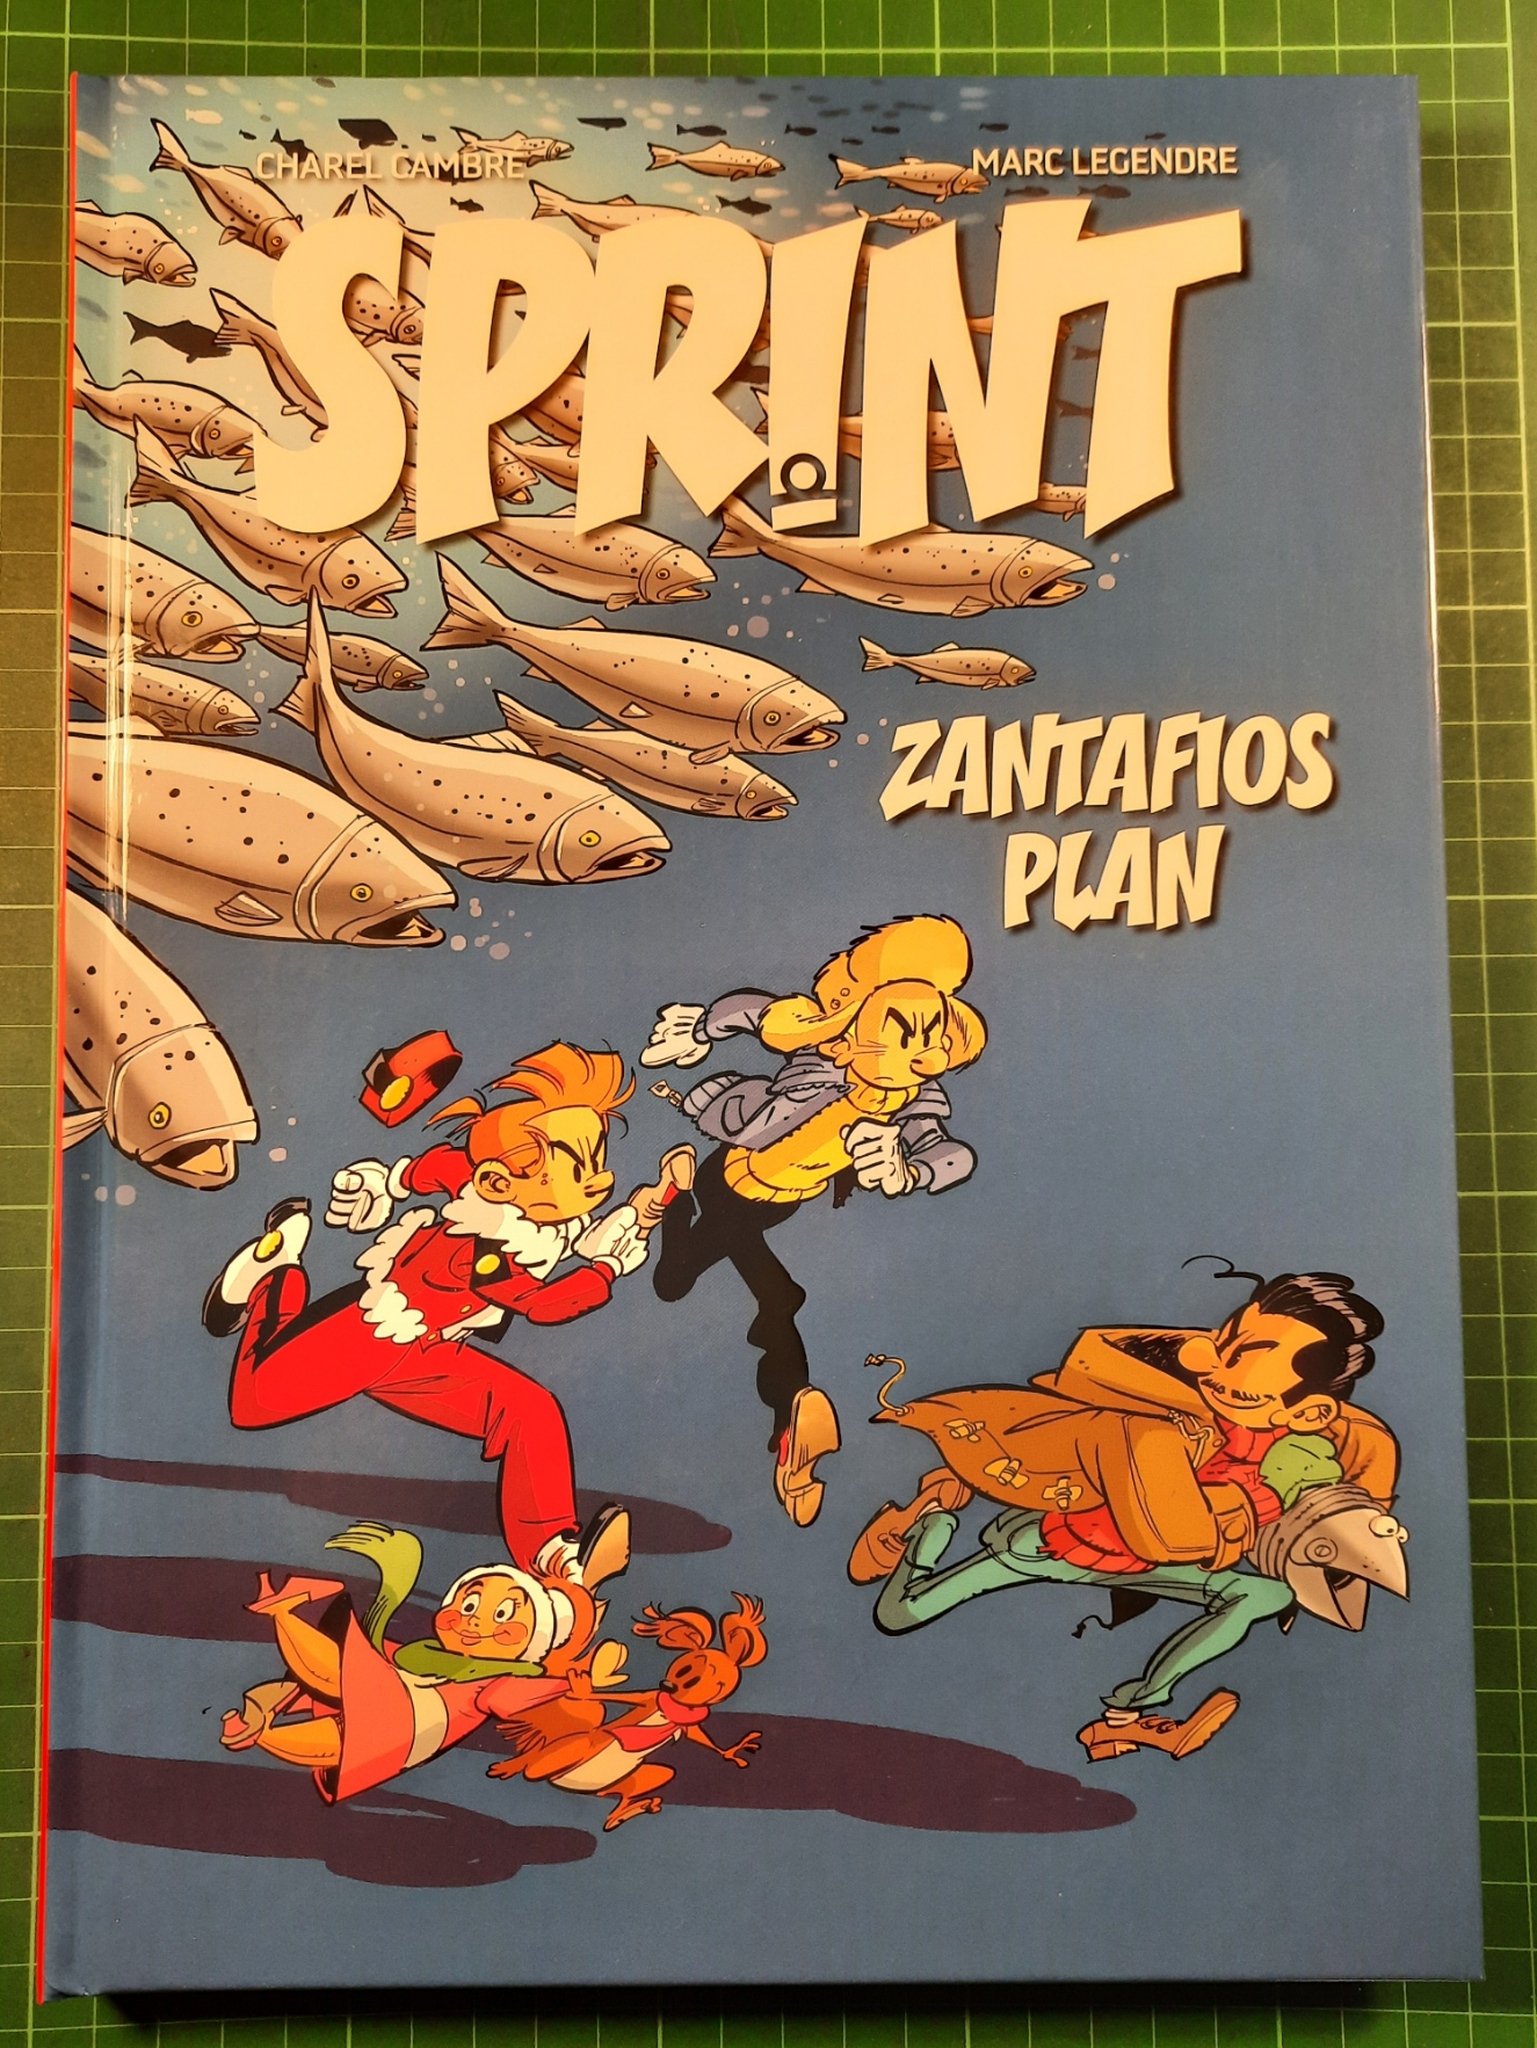 Sprint bok IV Zantafios plan (Bokhandelutgave)